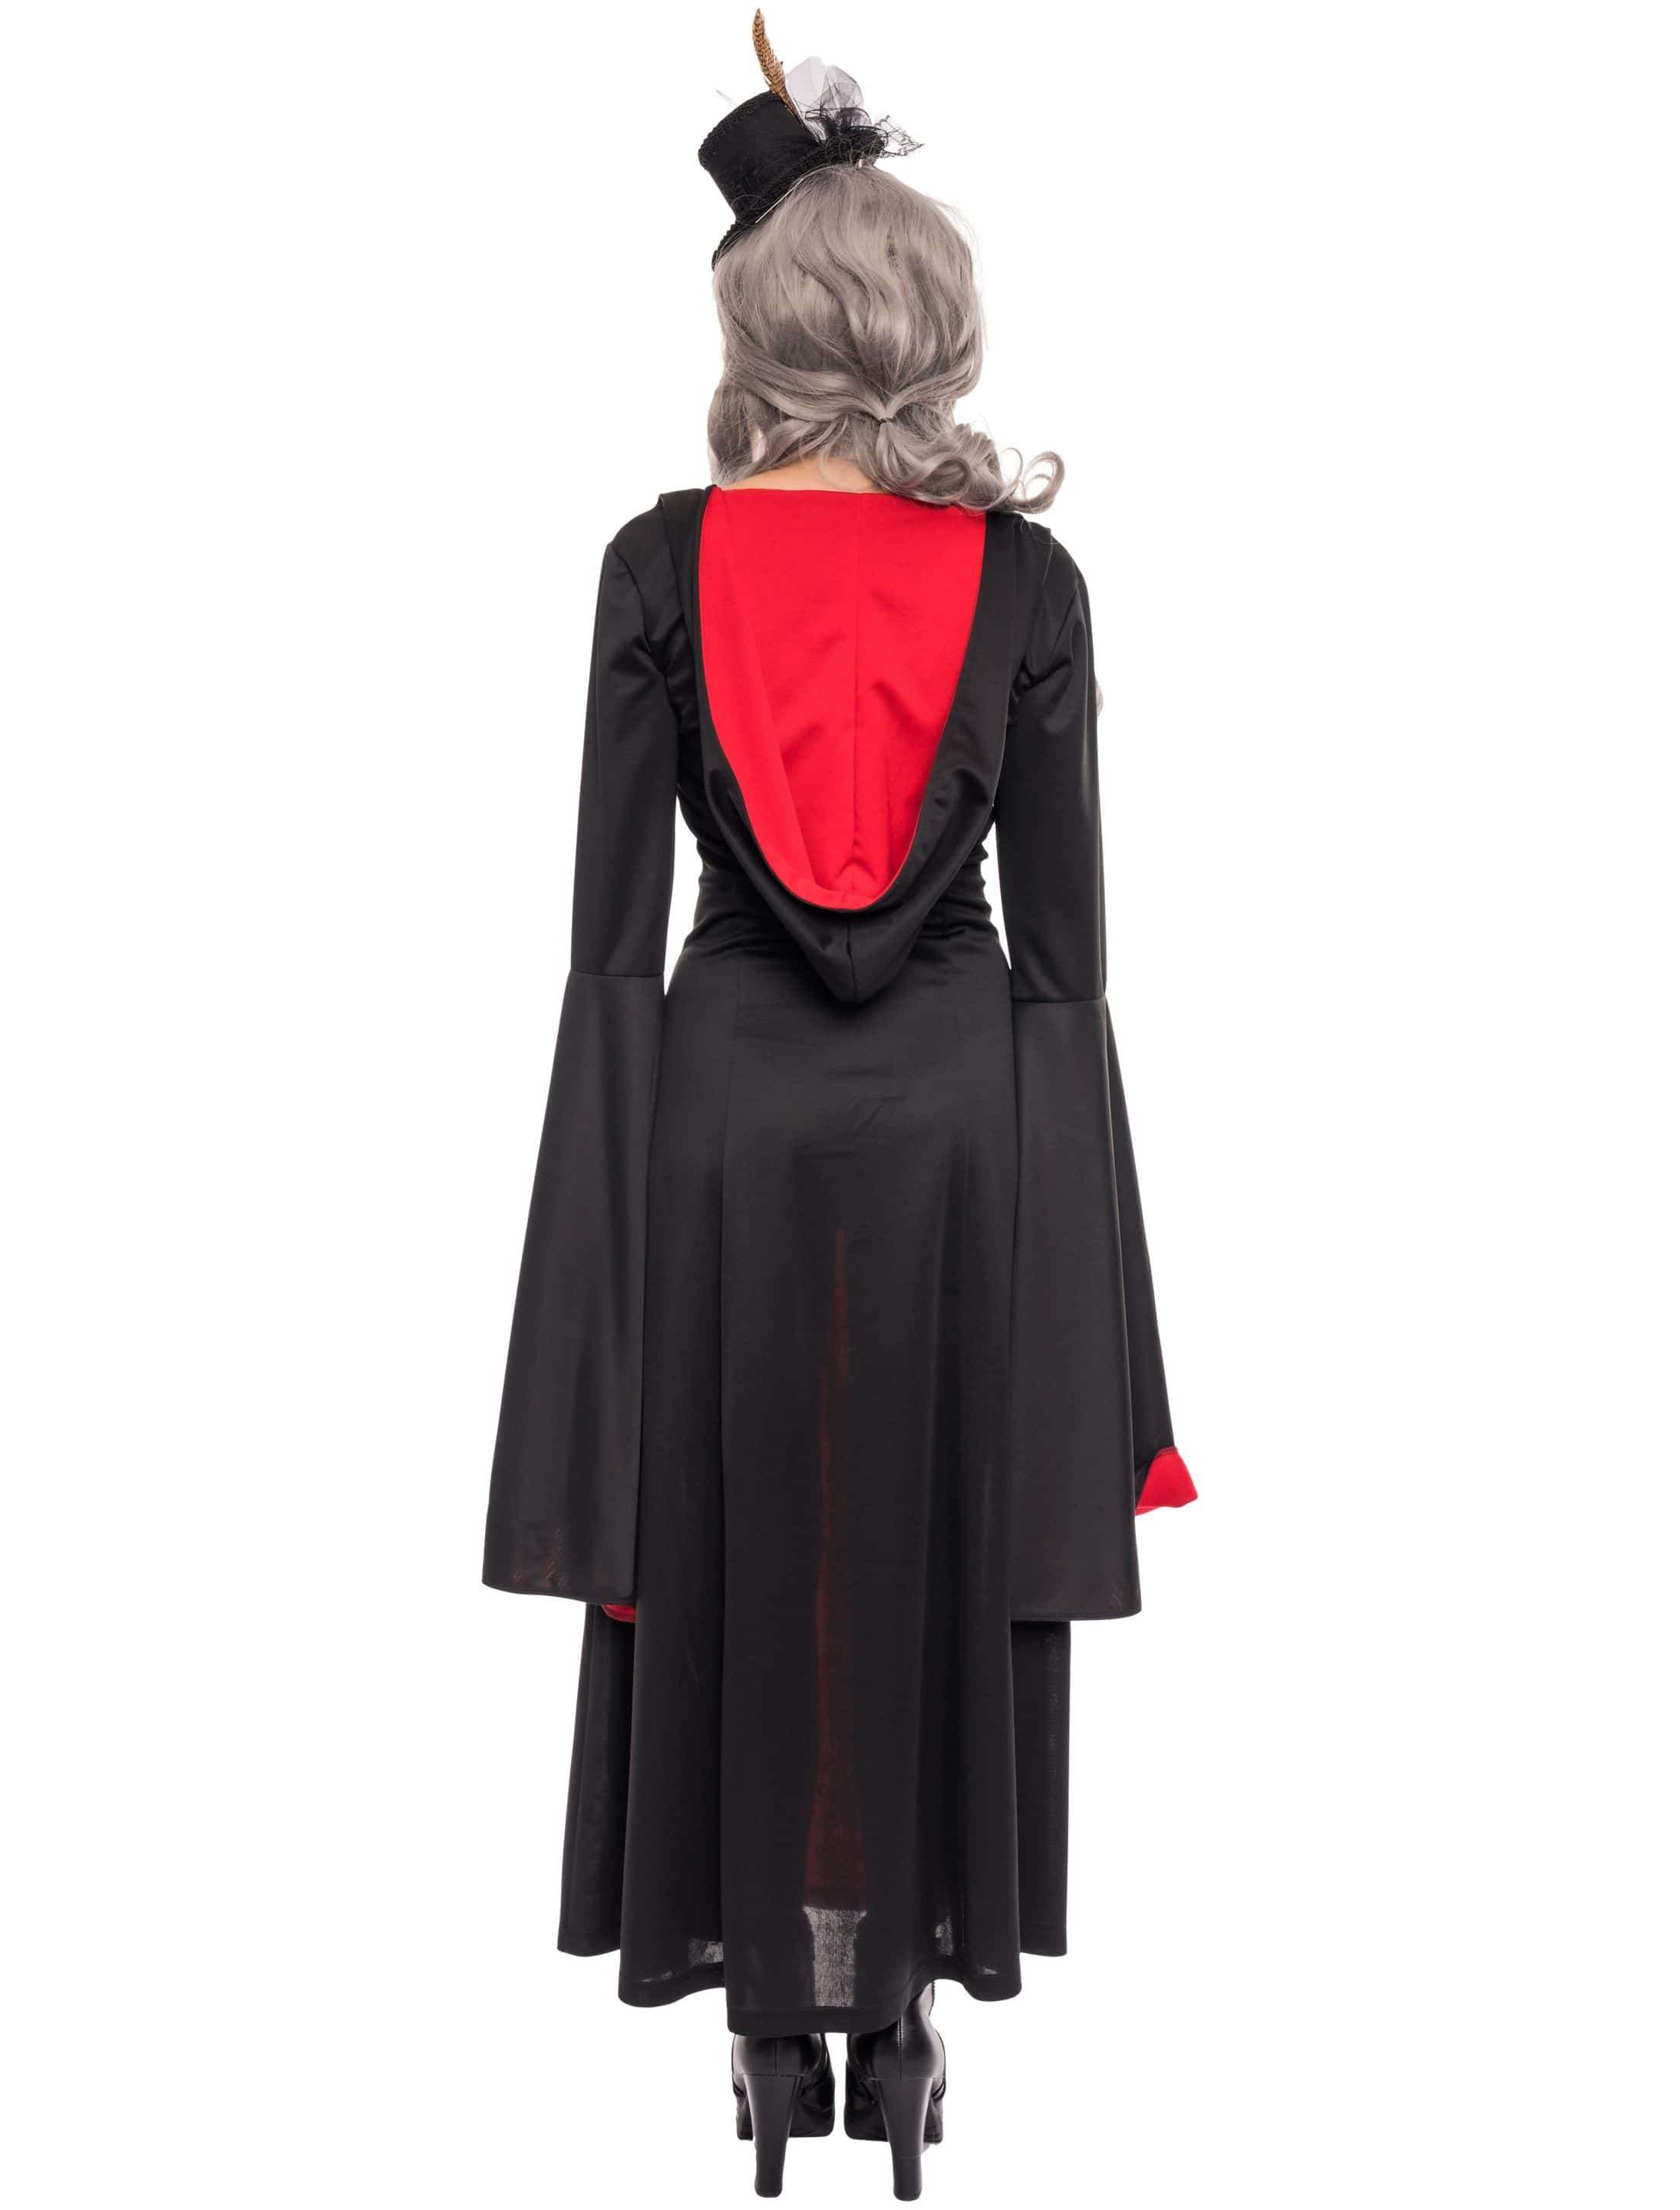 Kleid mit Kapuze Damen schwarz/rot M